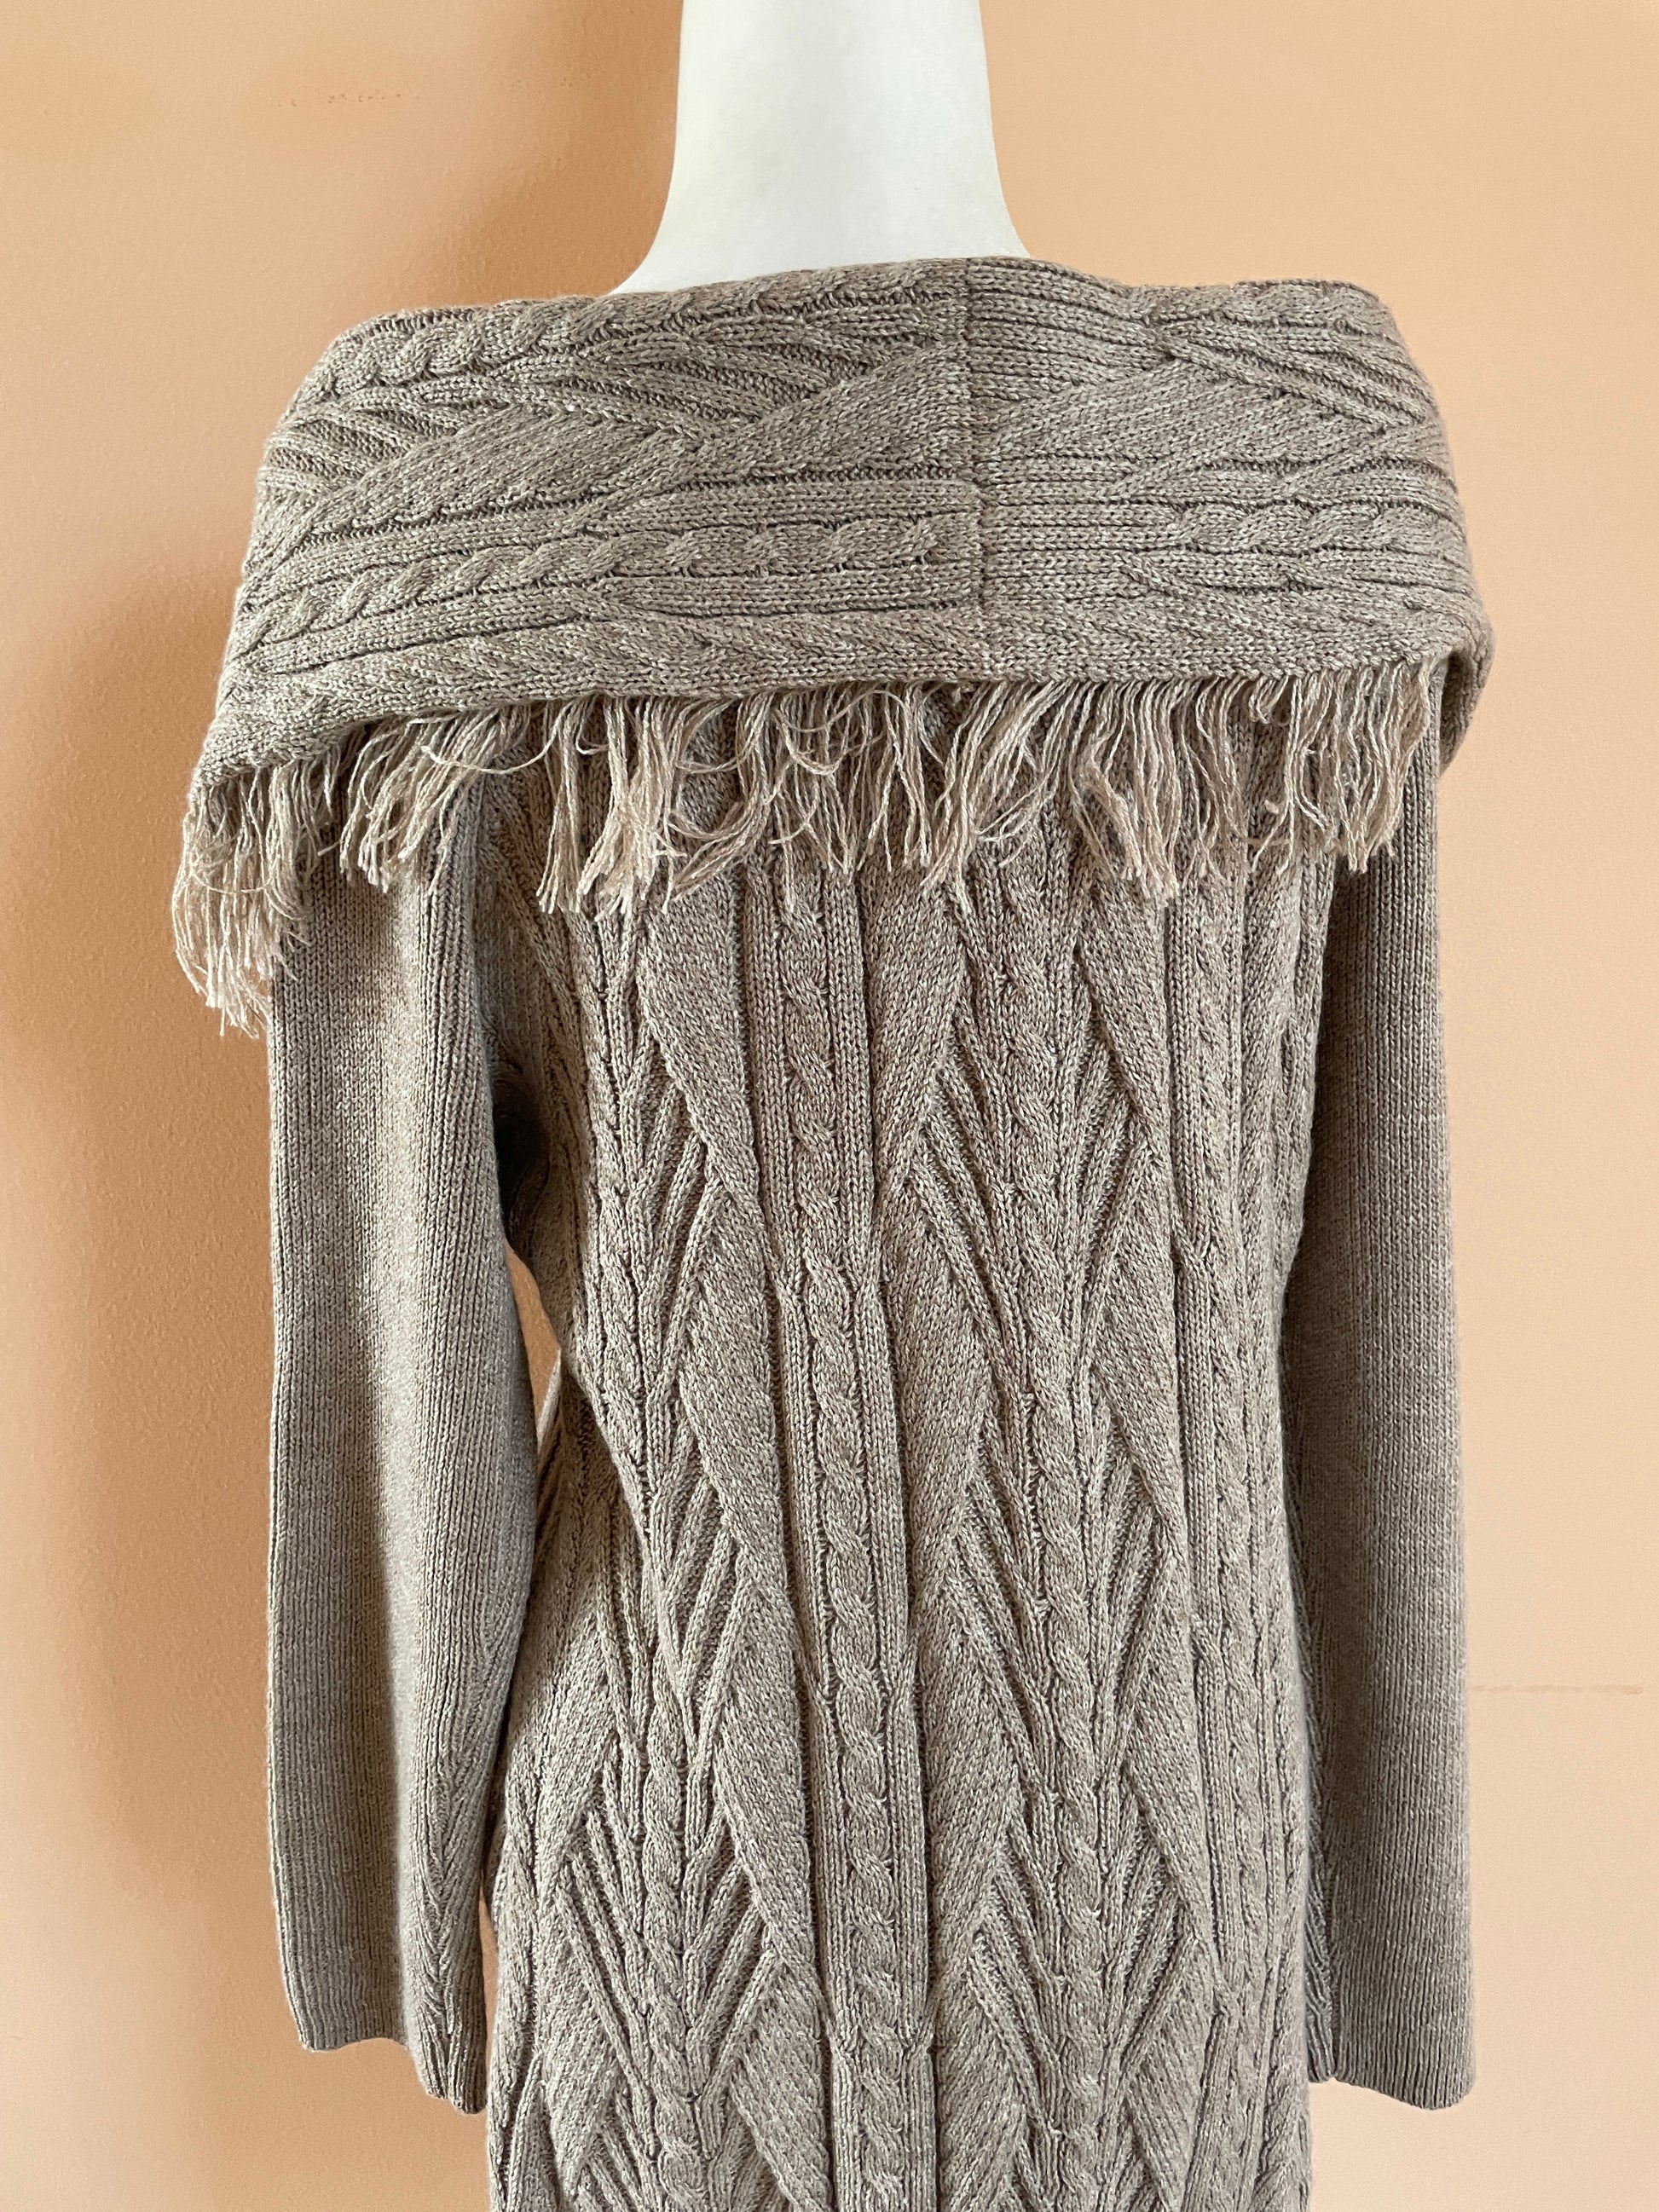  90s New York & Co Soft Gray Knit Stylish Sweater Dress L